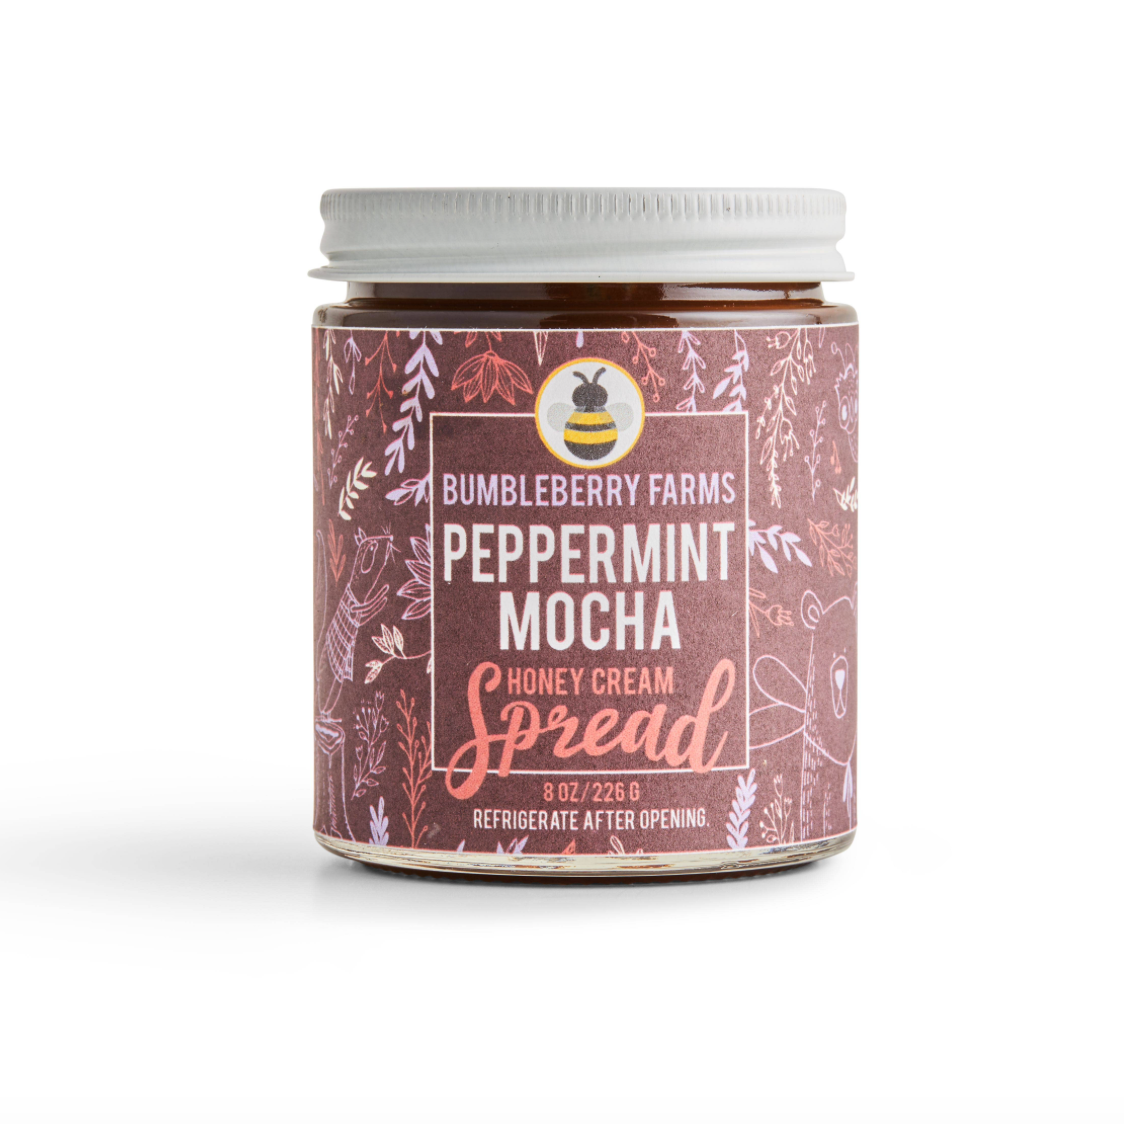 Peppermint Mocha Spread - Bumbleberry Farms